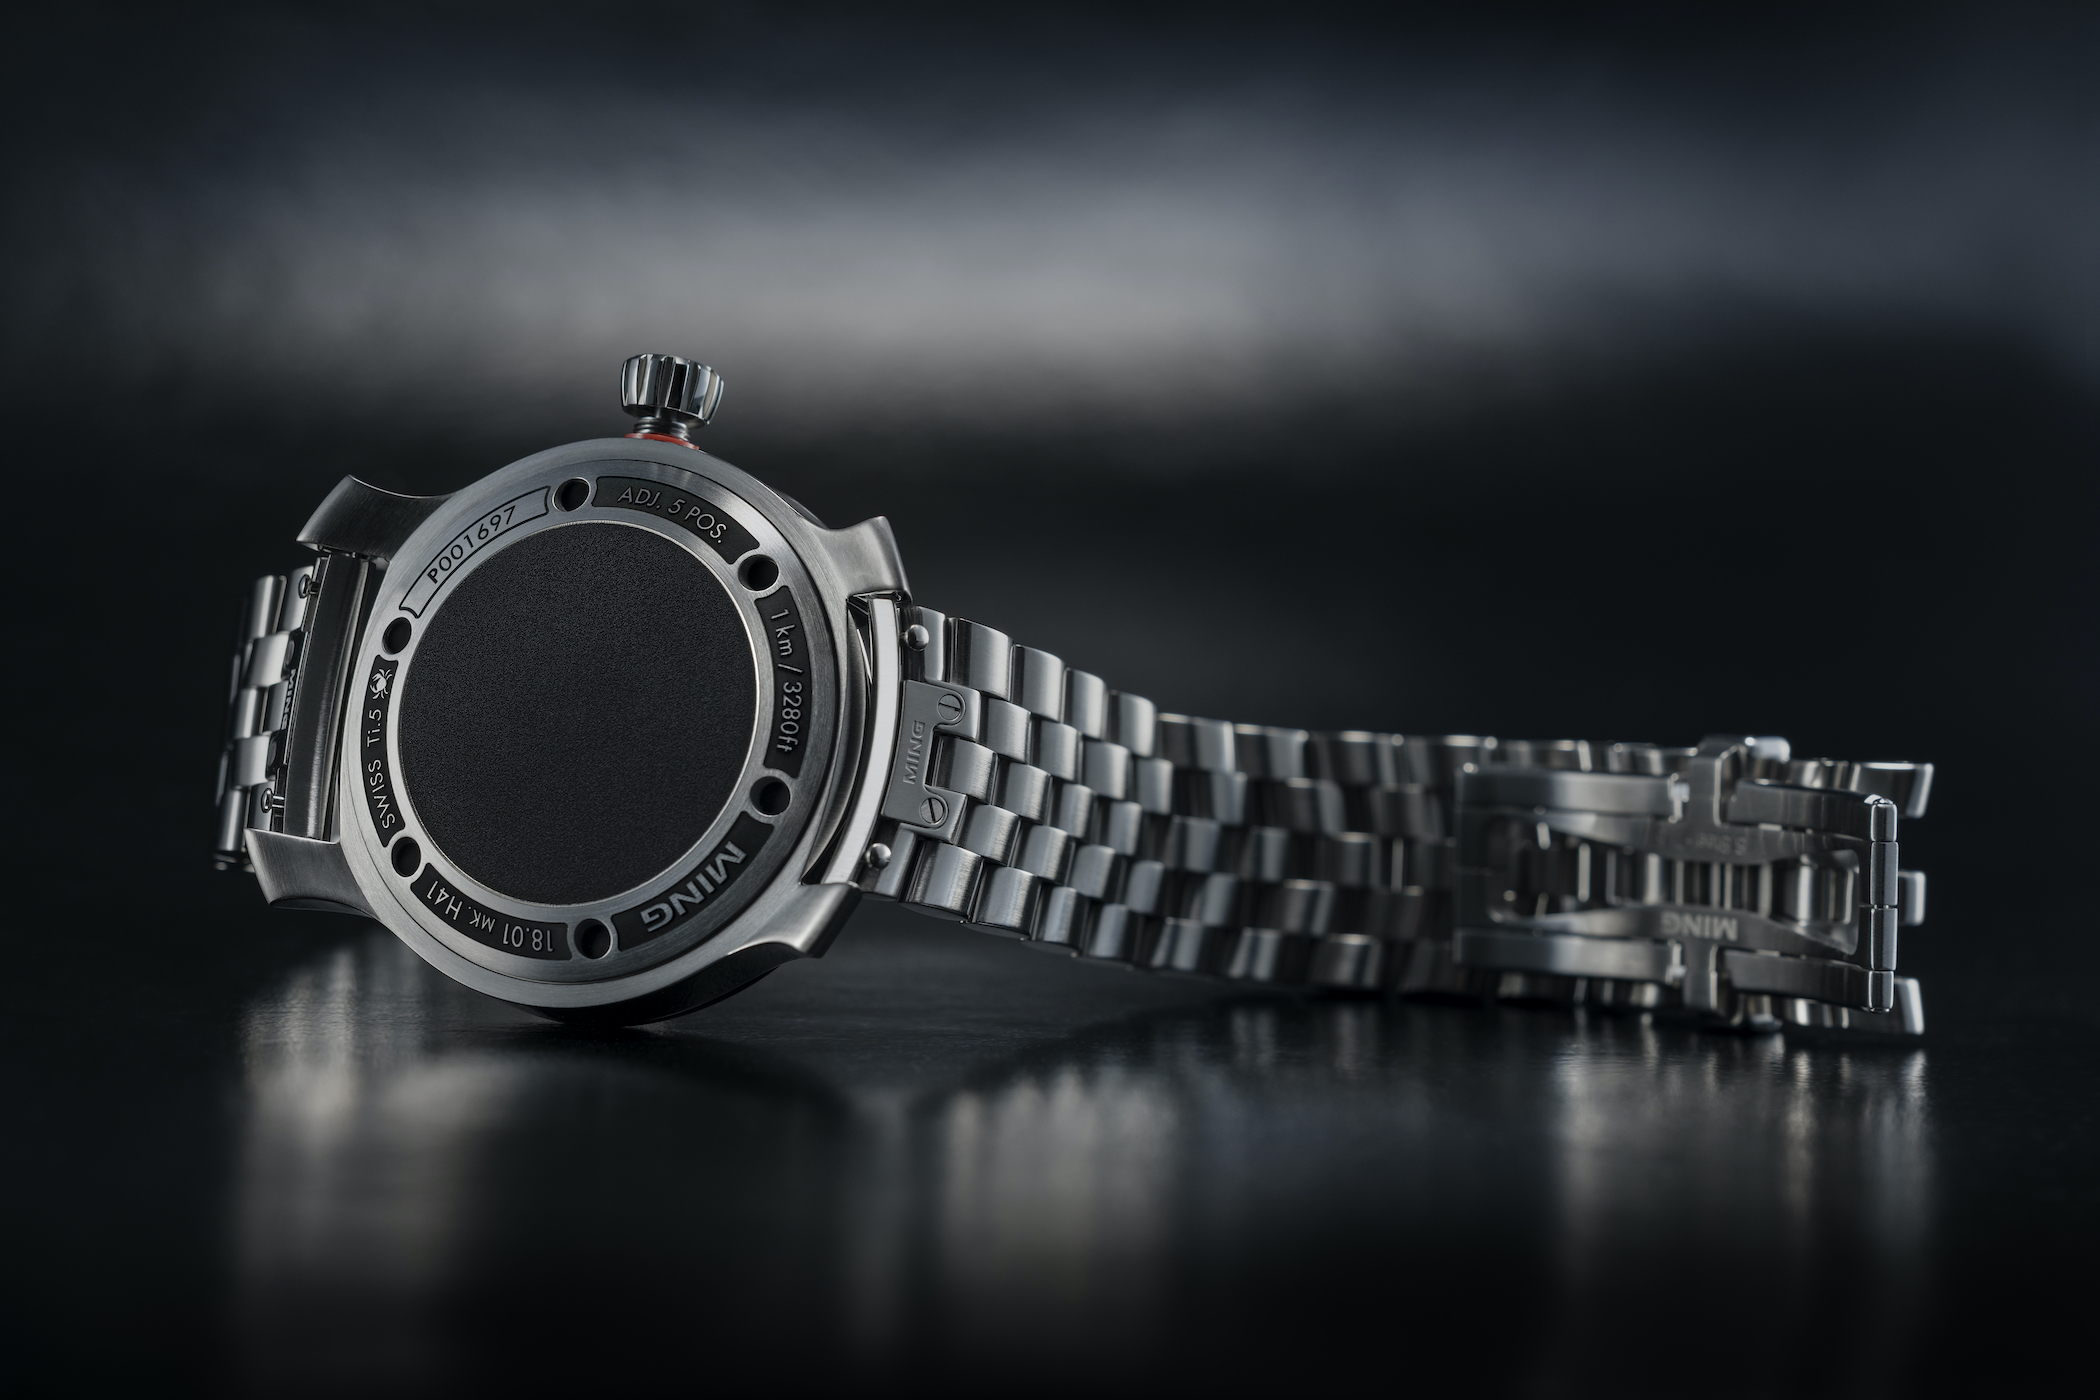 MING 18.01 H41 Titanium Dive Watch